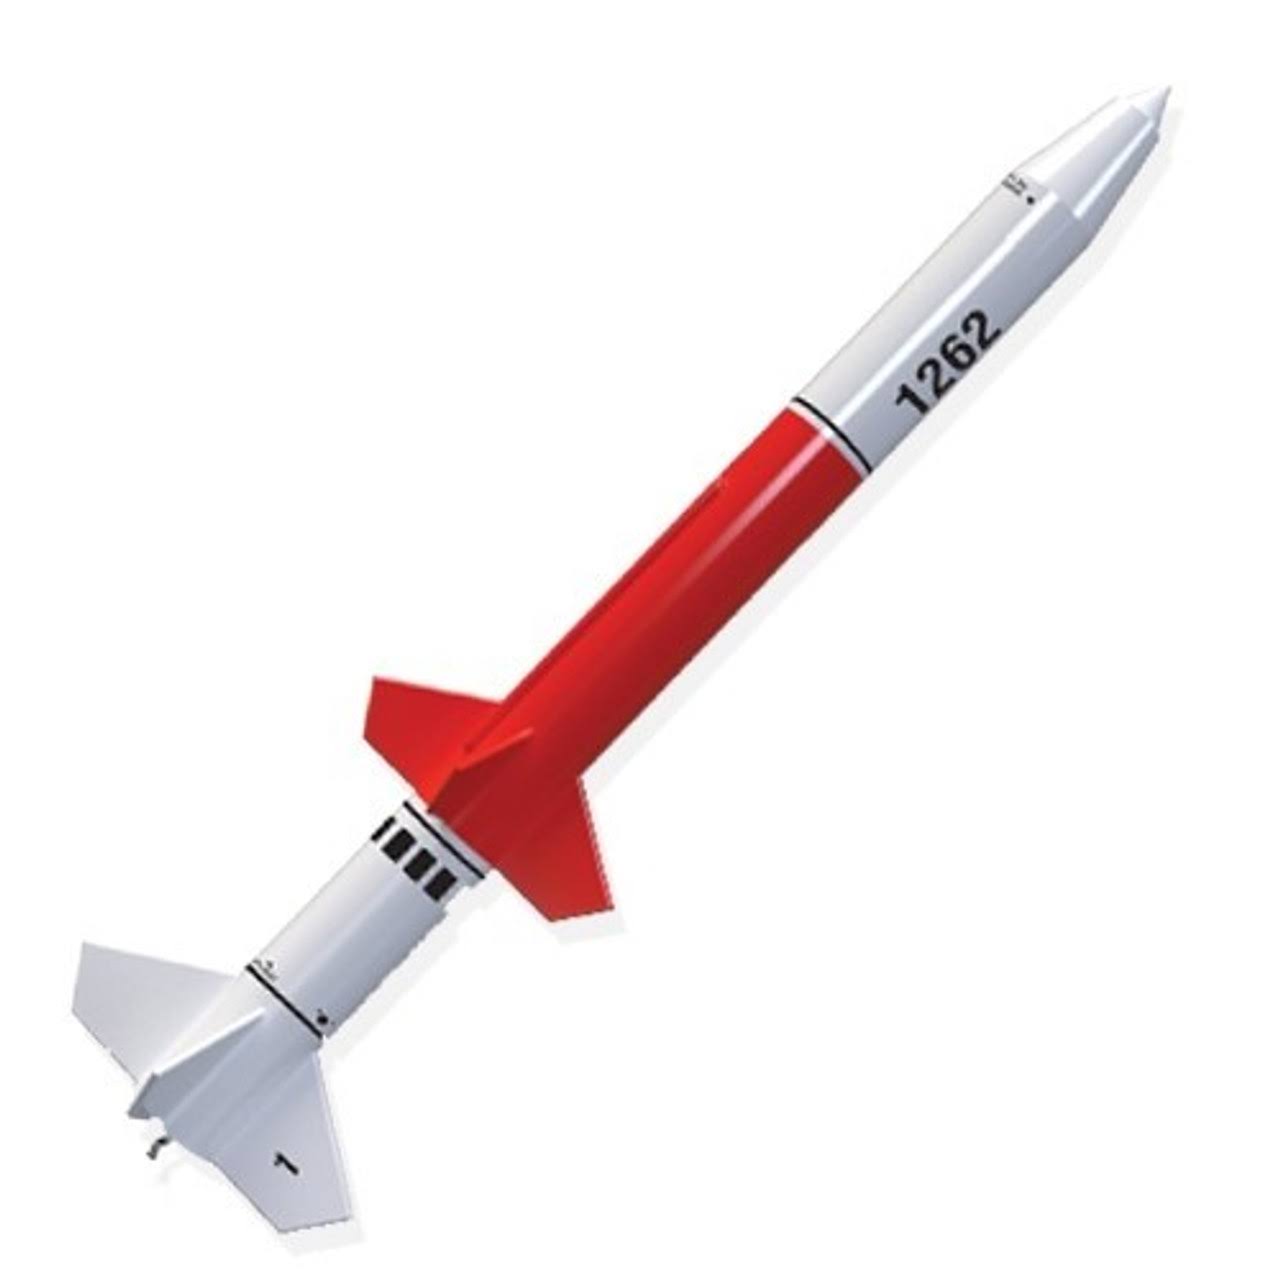 Estes Flying Model Rocket - Red Nova